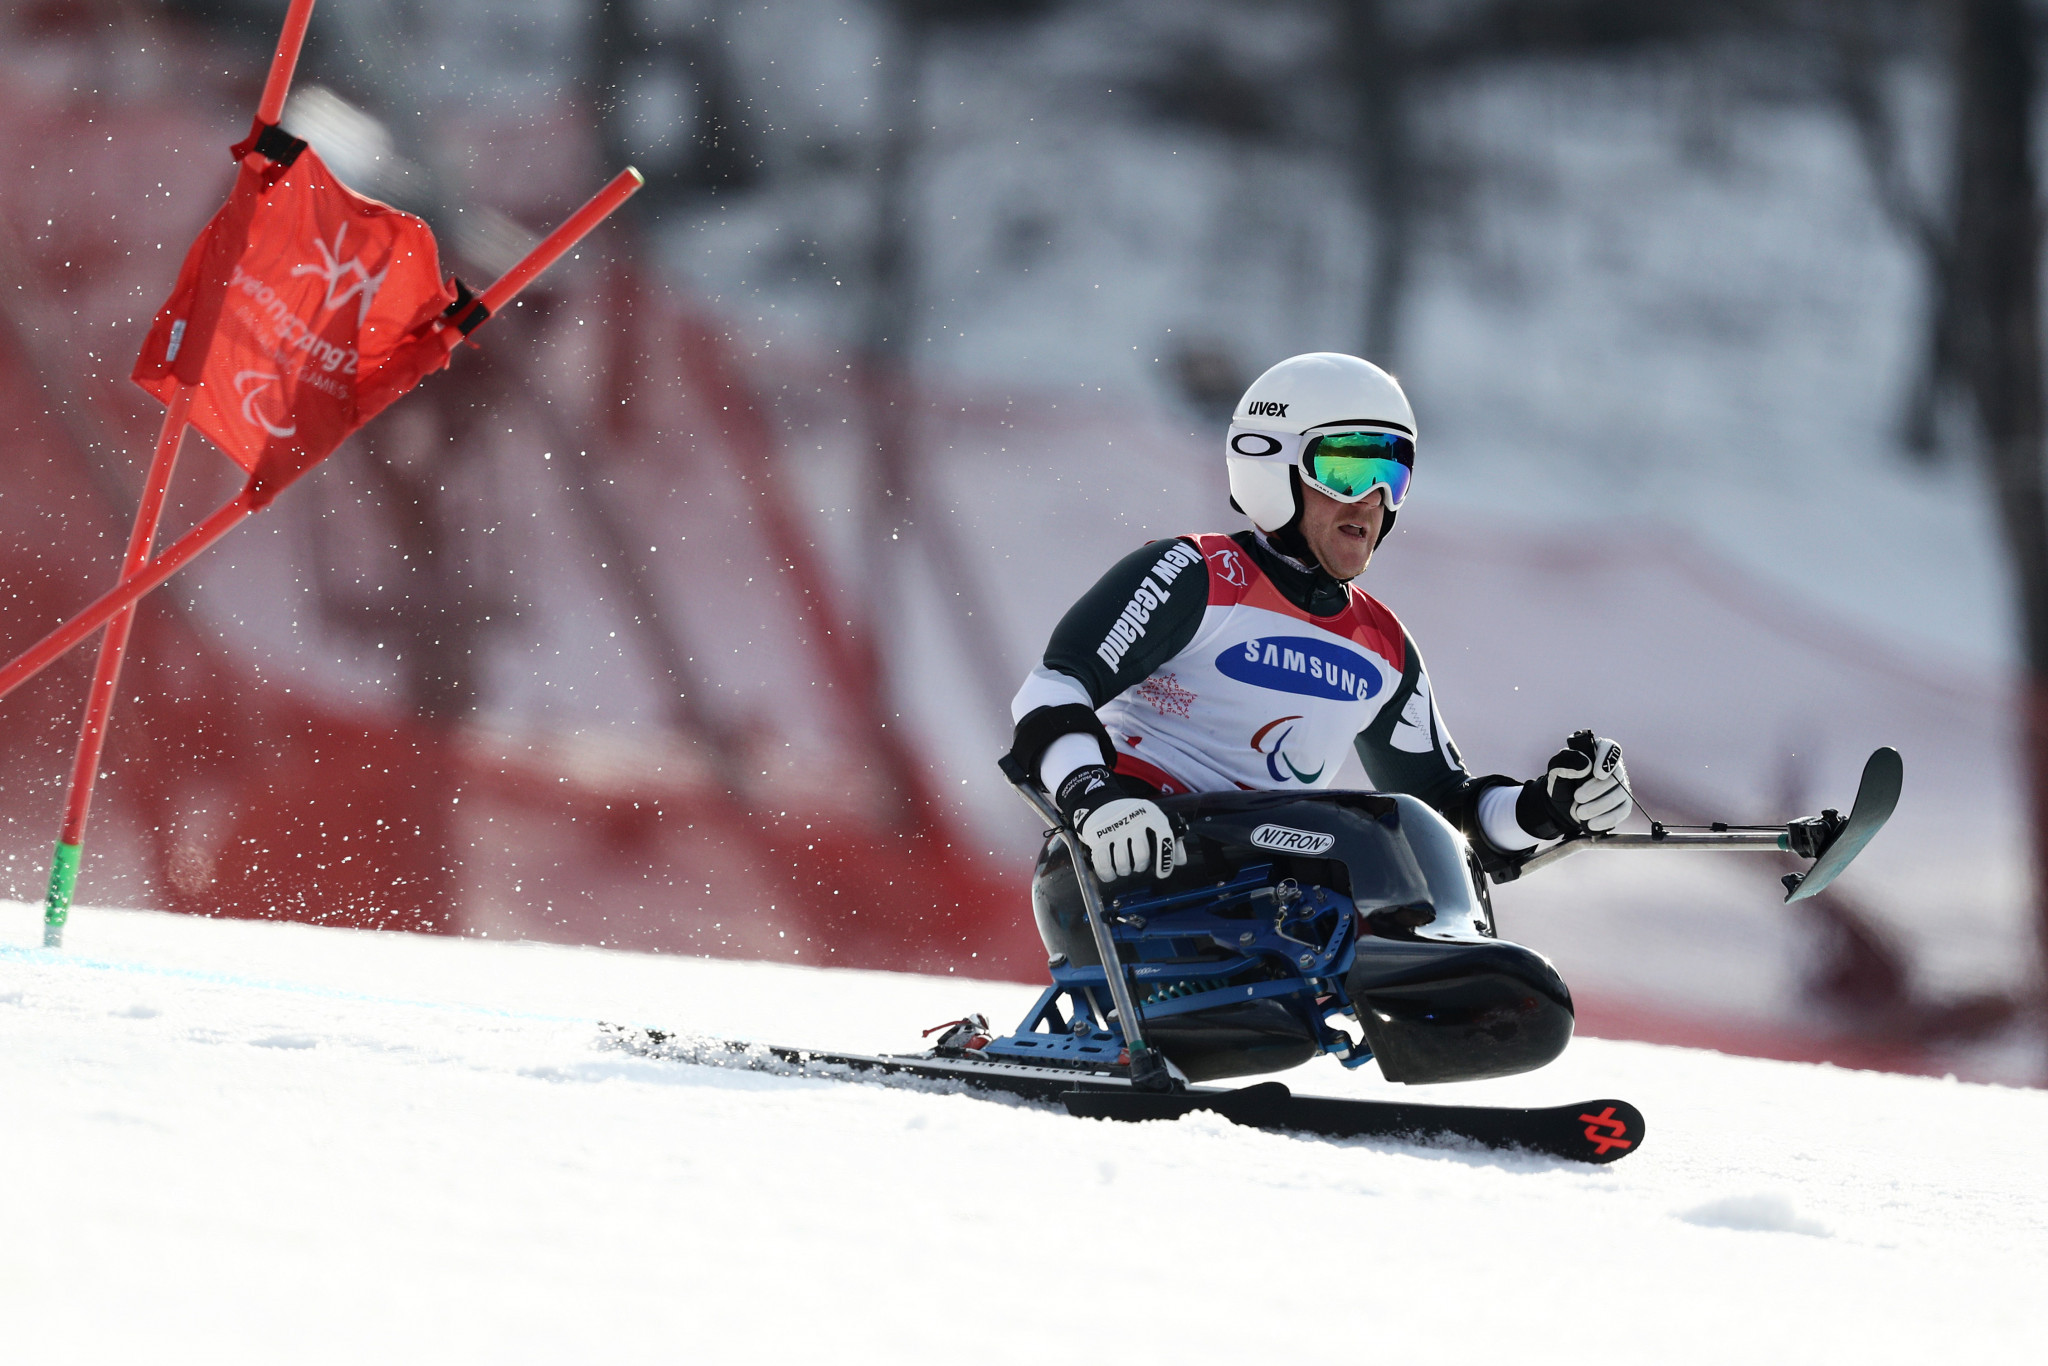 Having won a Para Alpine skiing silver at Sochi 2014 and bronze at Pyeongchang 2018, Corey Peters has been selected to represent New Zealand again at Beijing 2022 ©Getty Images